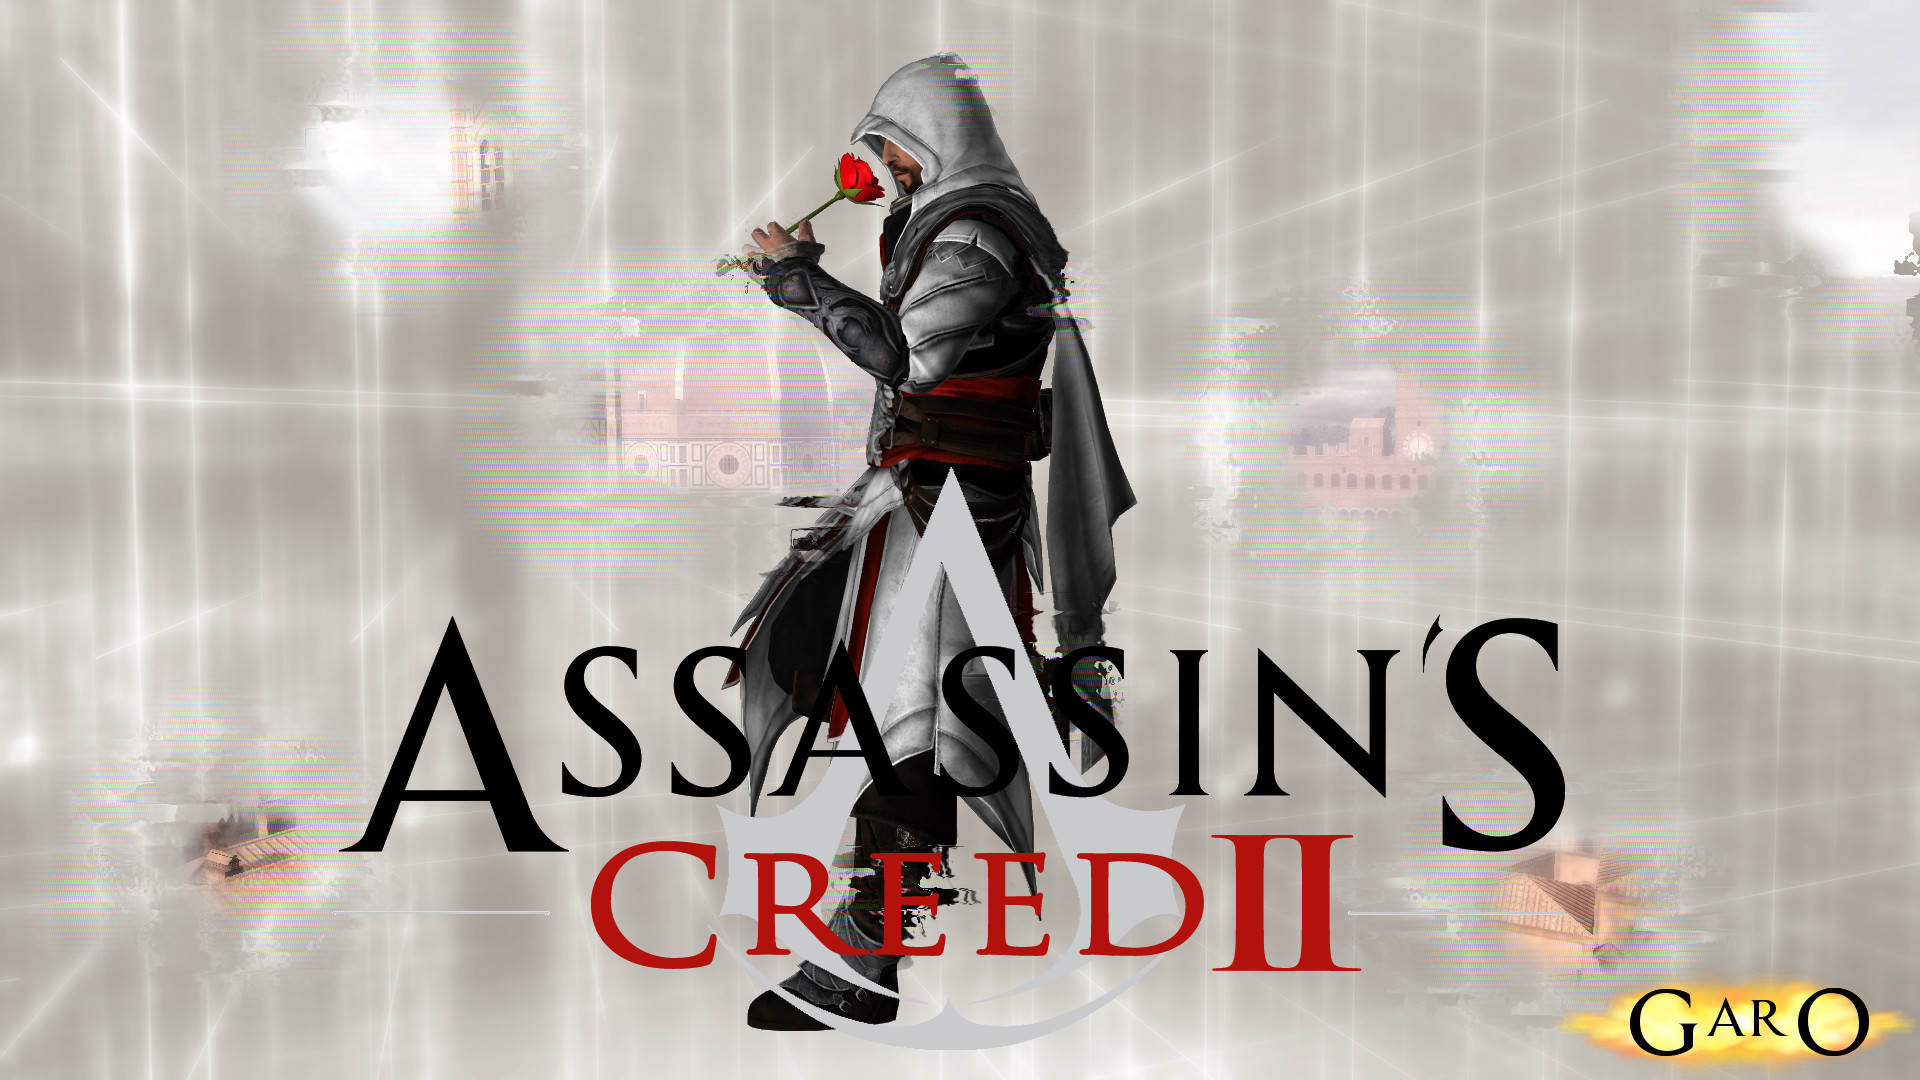 Assassins Creed 2 Wallpaper Animus by GaroArts